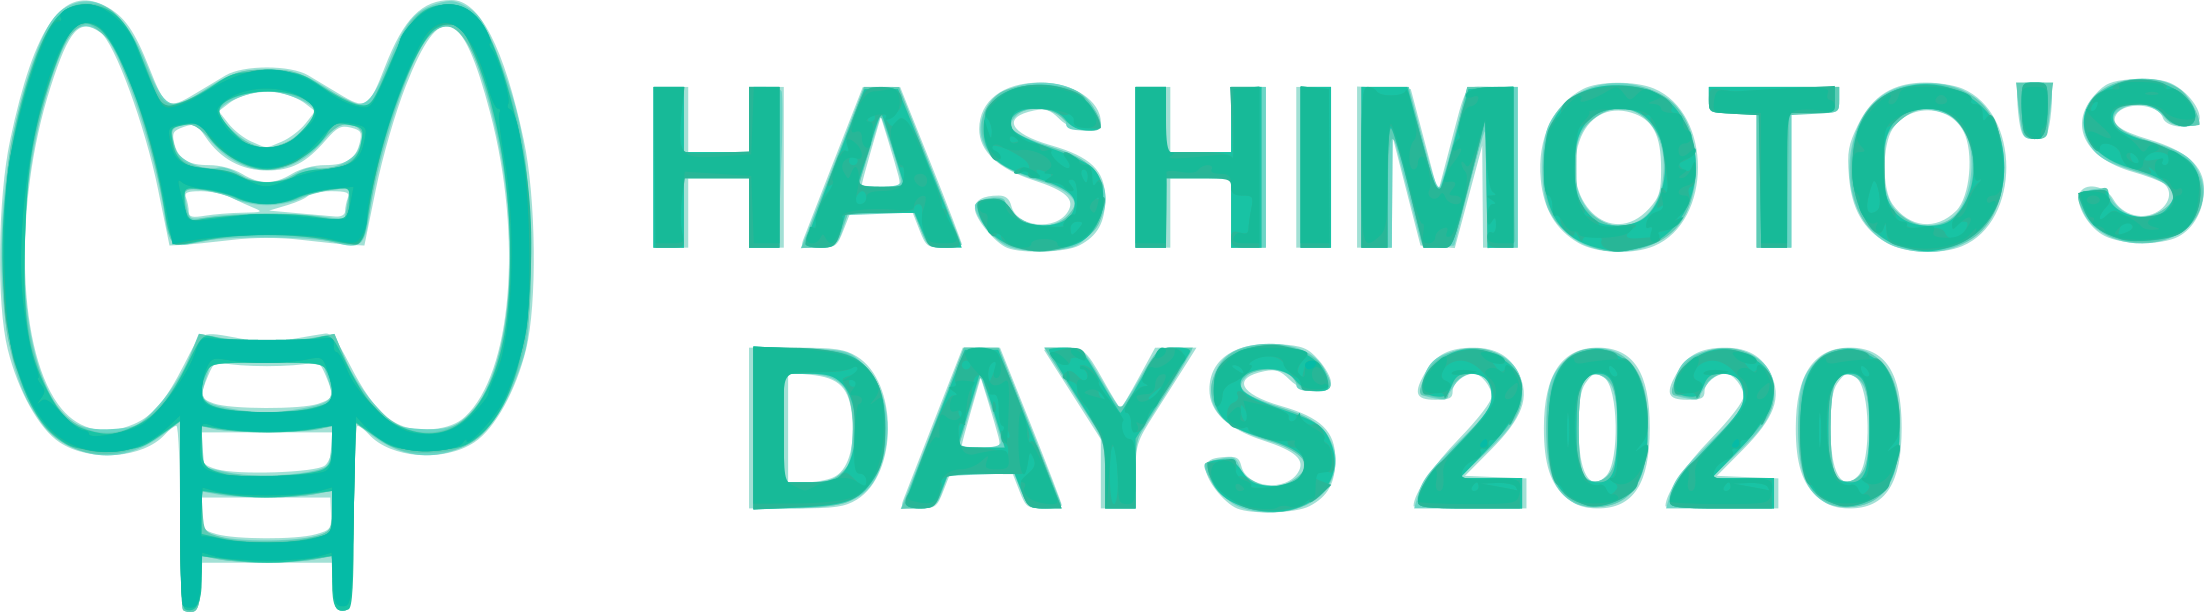 Online Hashimoto Days 